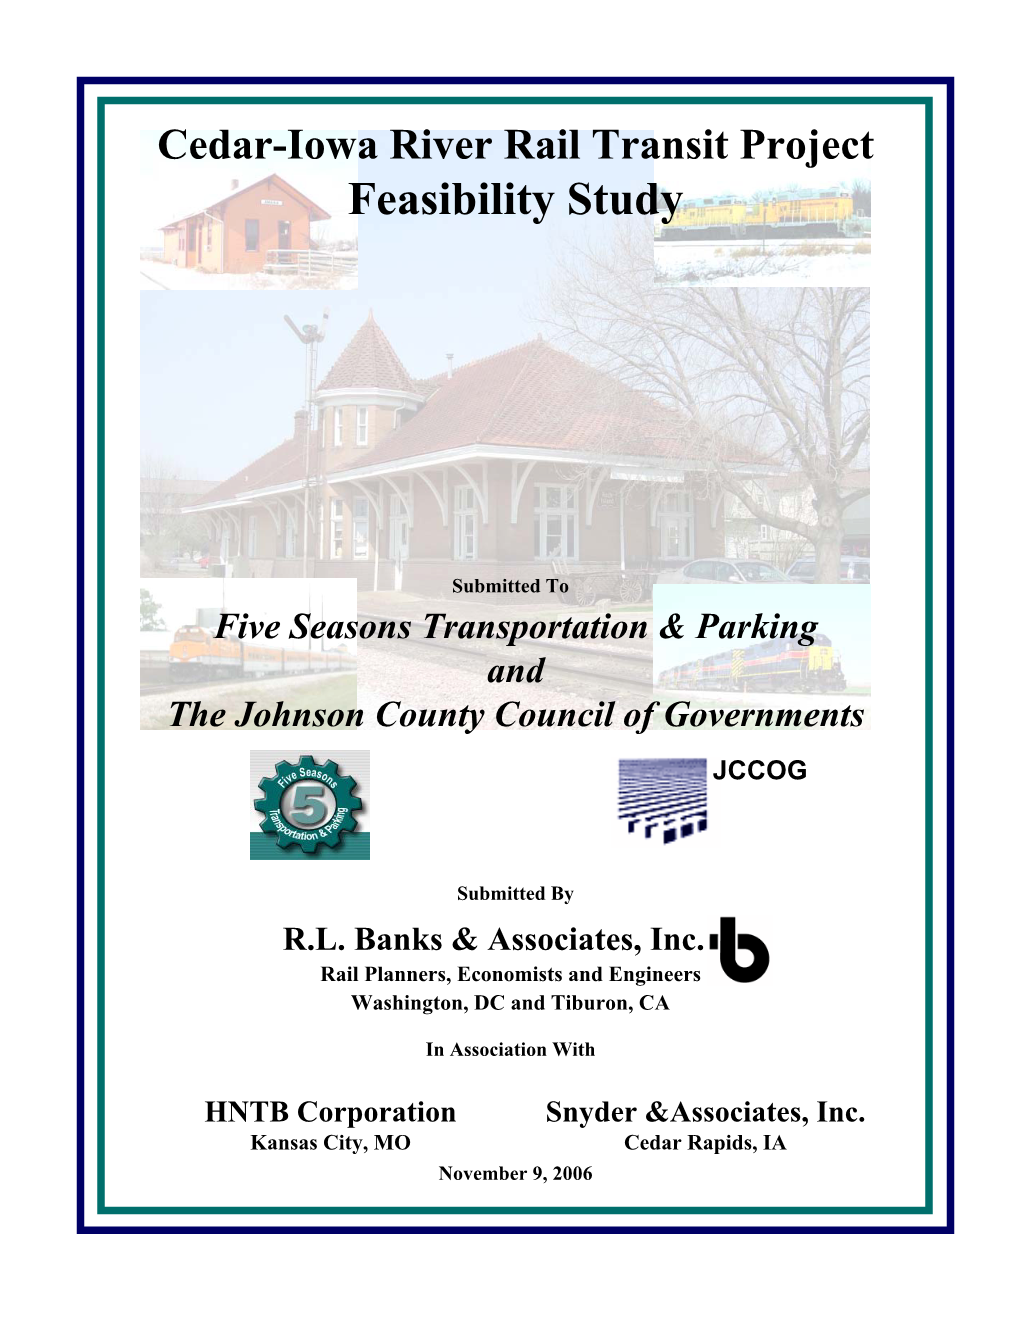 Cedar-Iowa River Rail Transit Project Feasibility Study